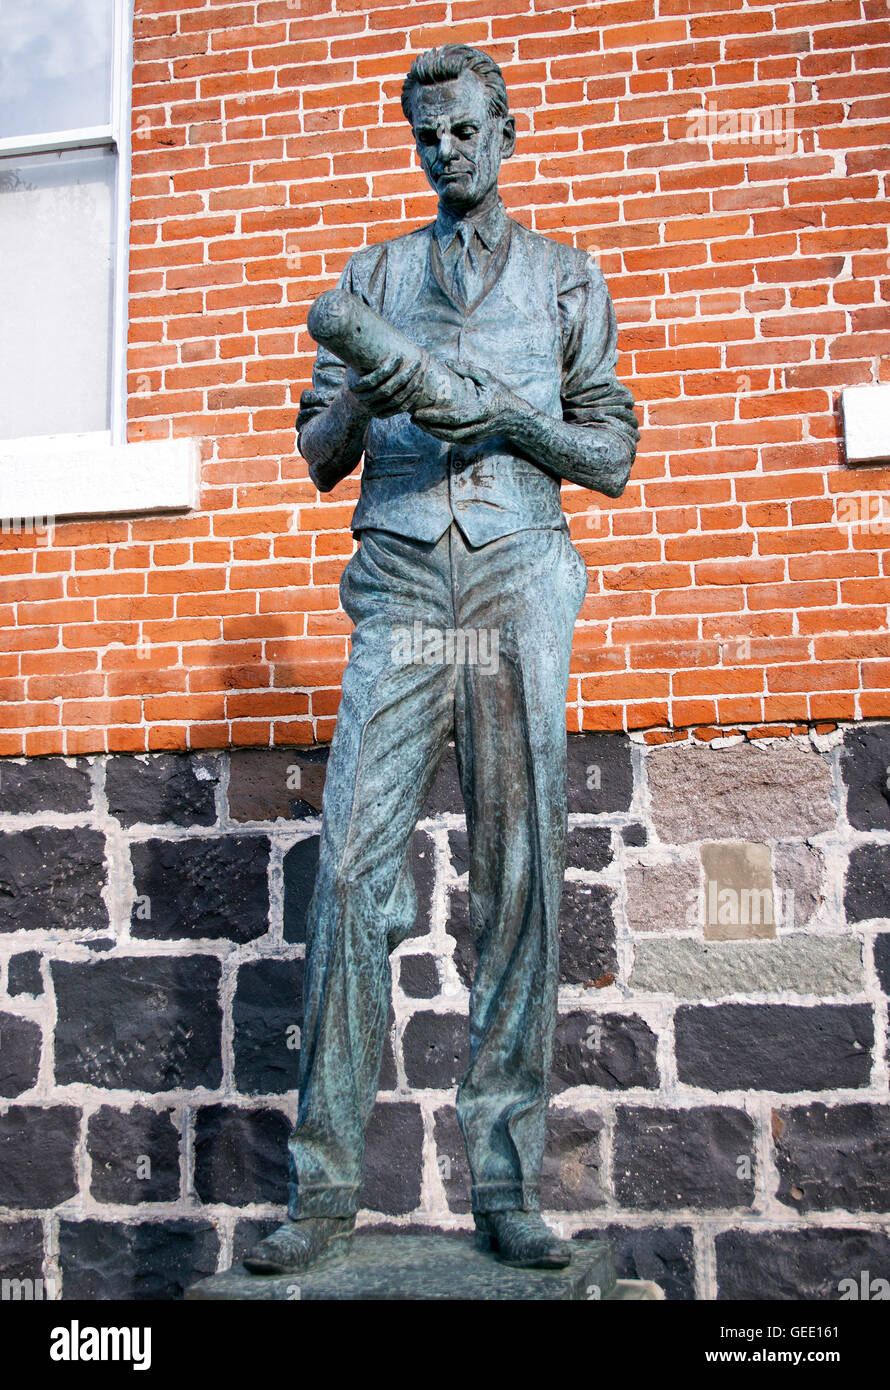 Statue of Philo Farnsworth the father of Television born in Beaver Utah Stock Photo